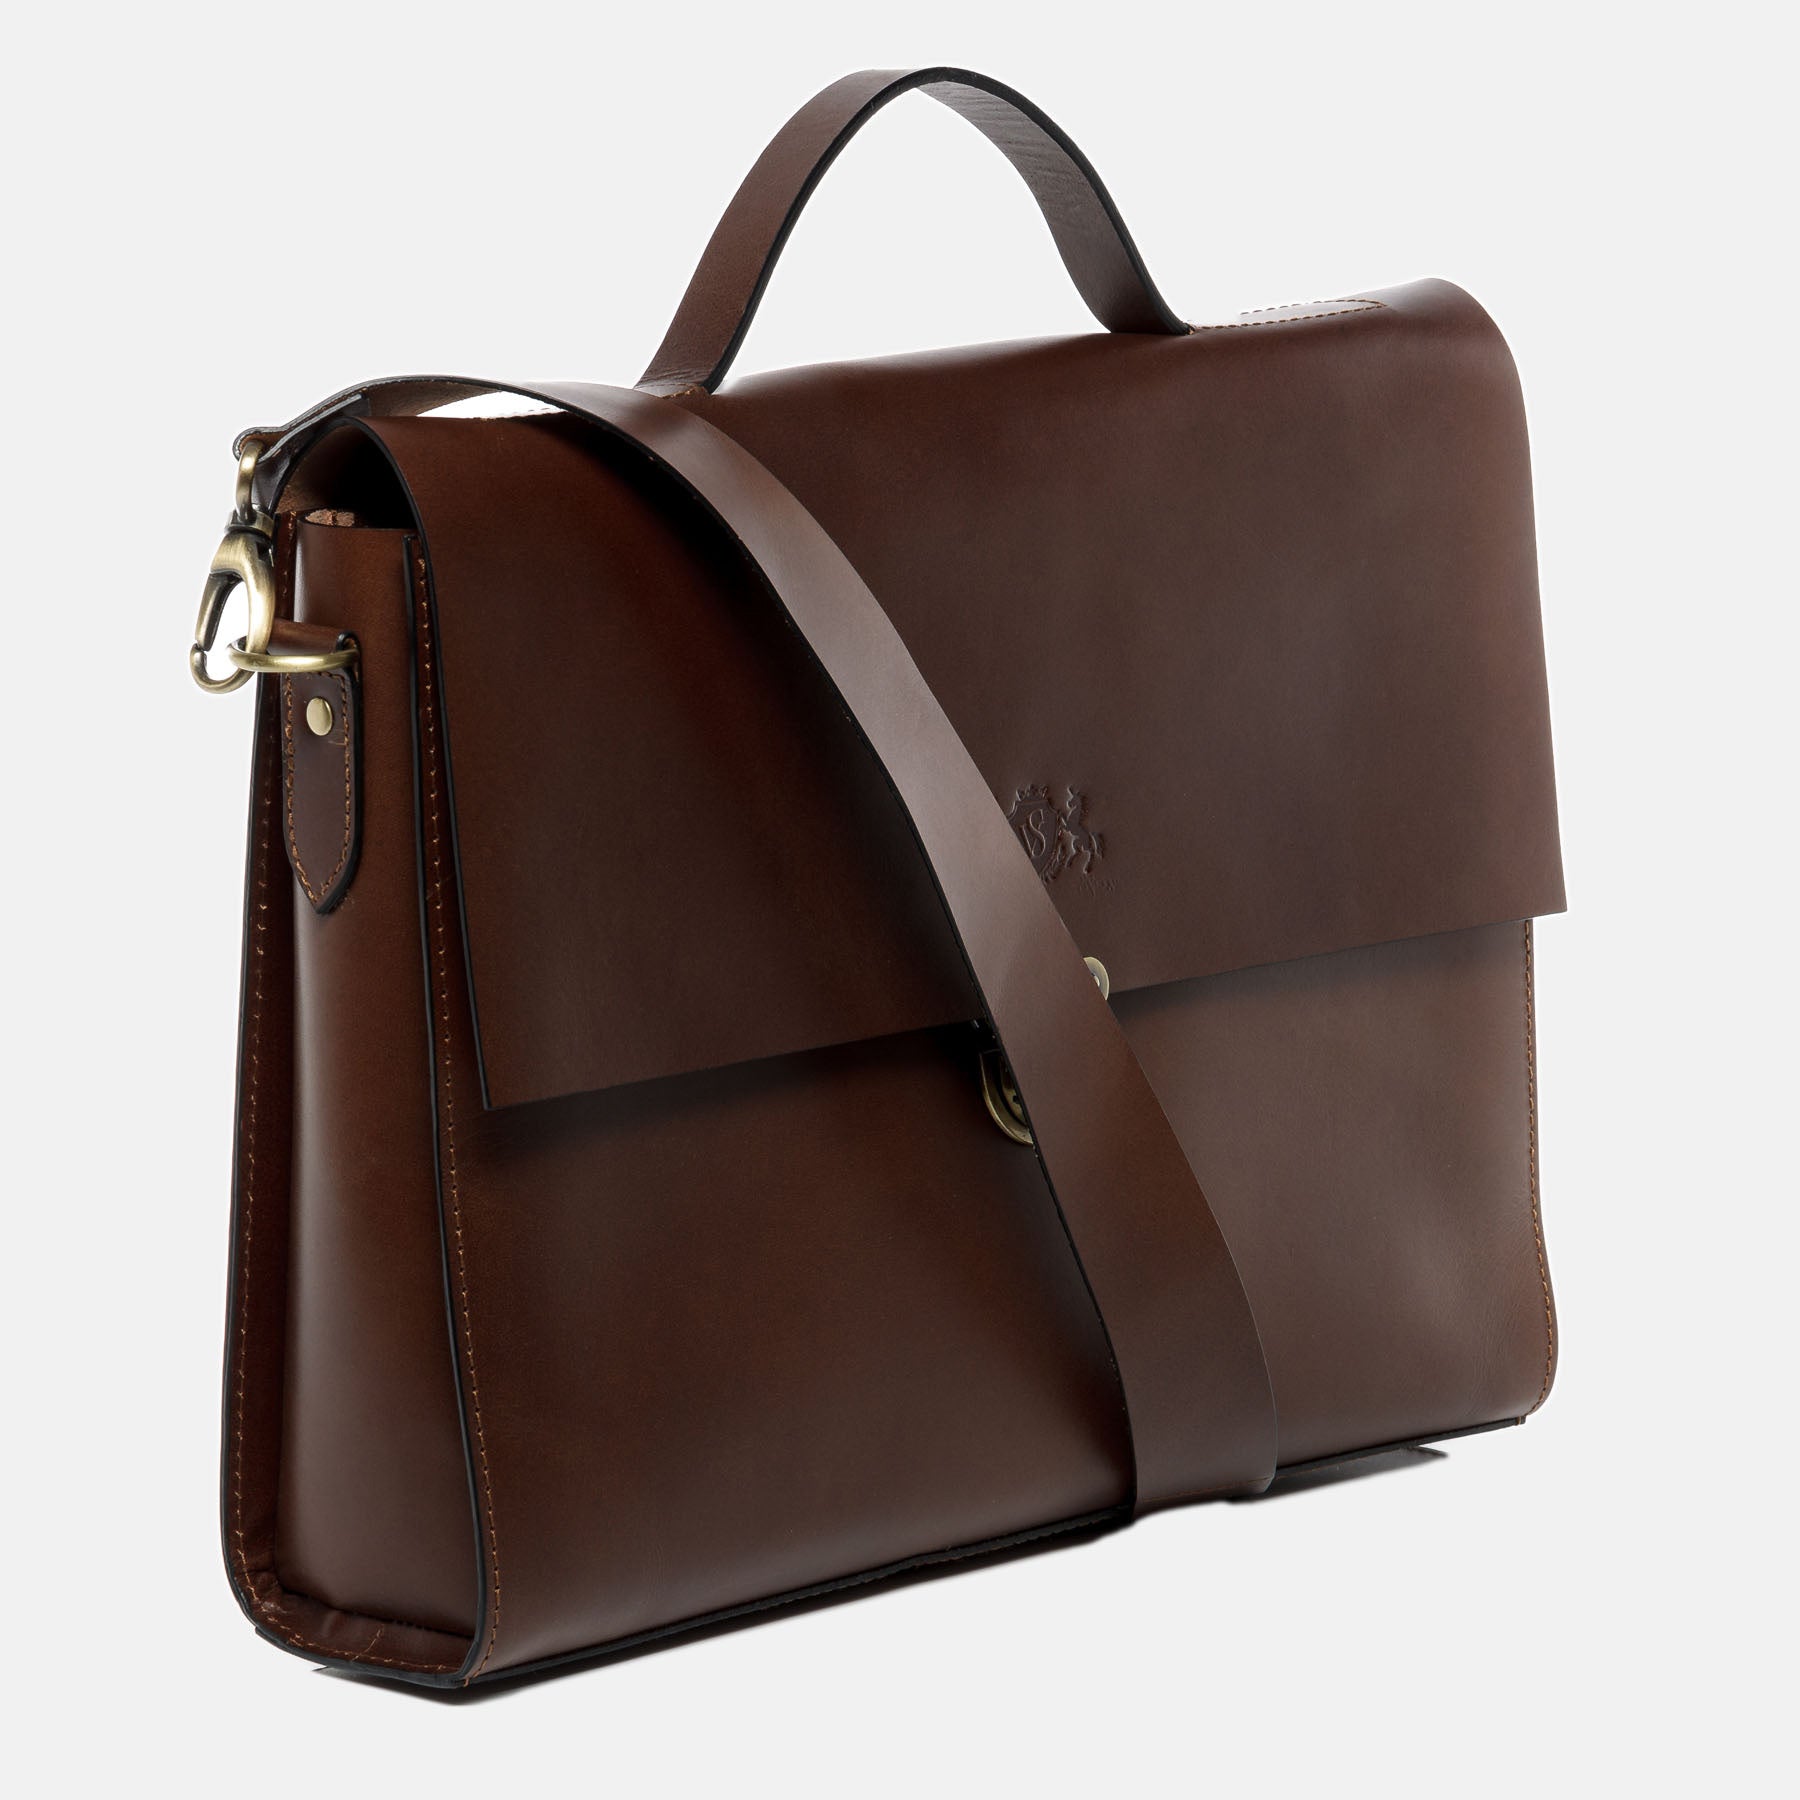 SID & VAIN briefcase TRISH saddle leather brown business bag briefcase